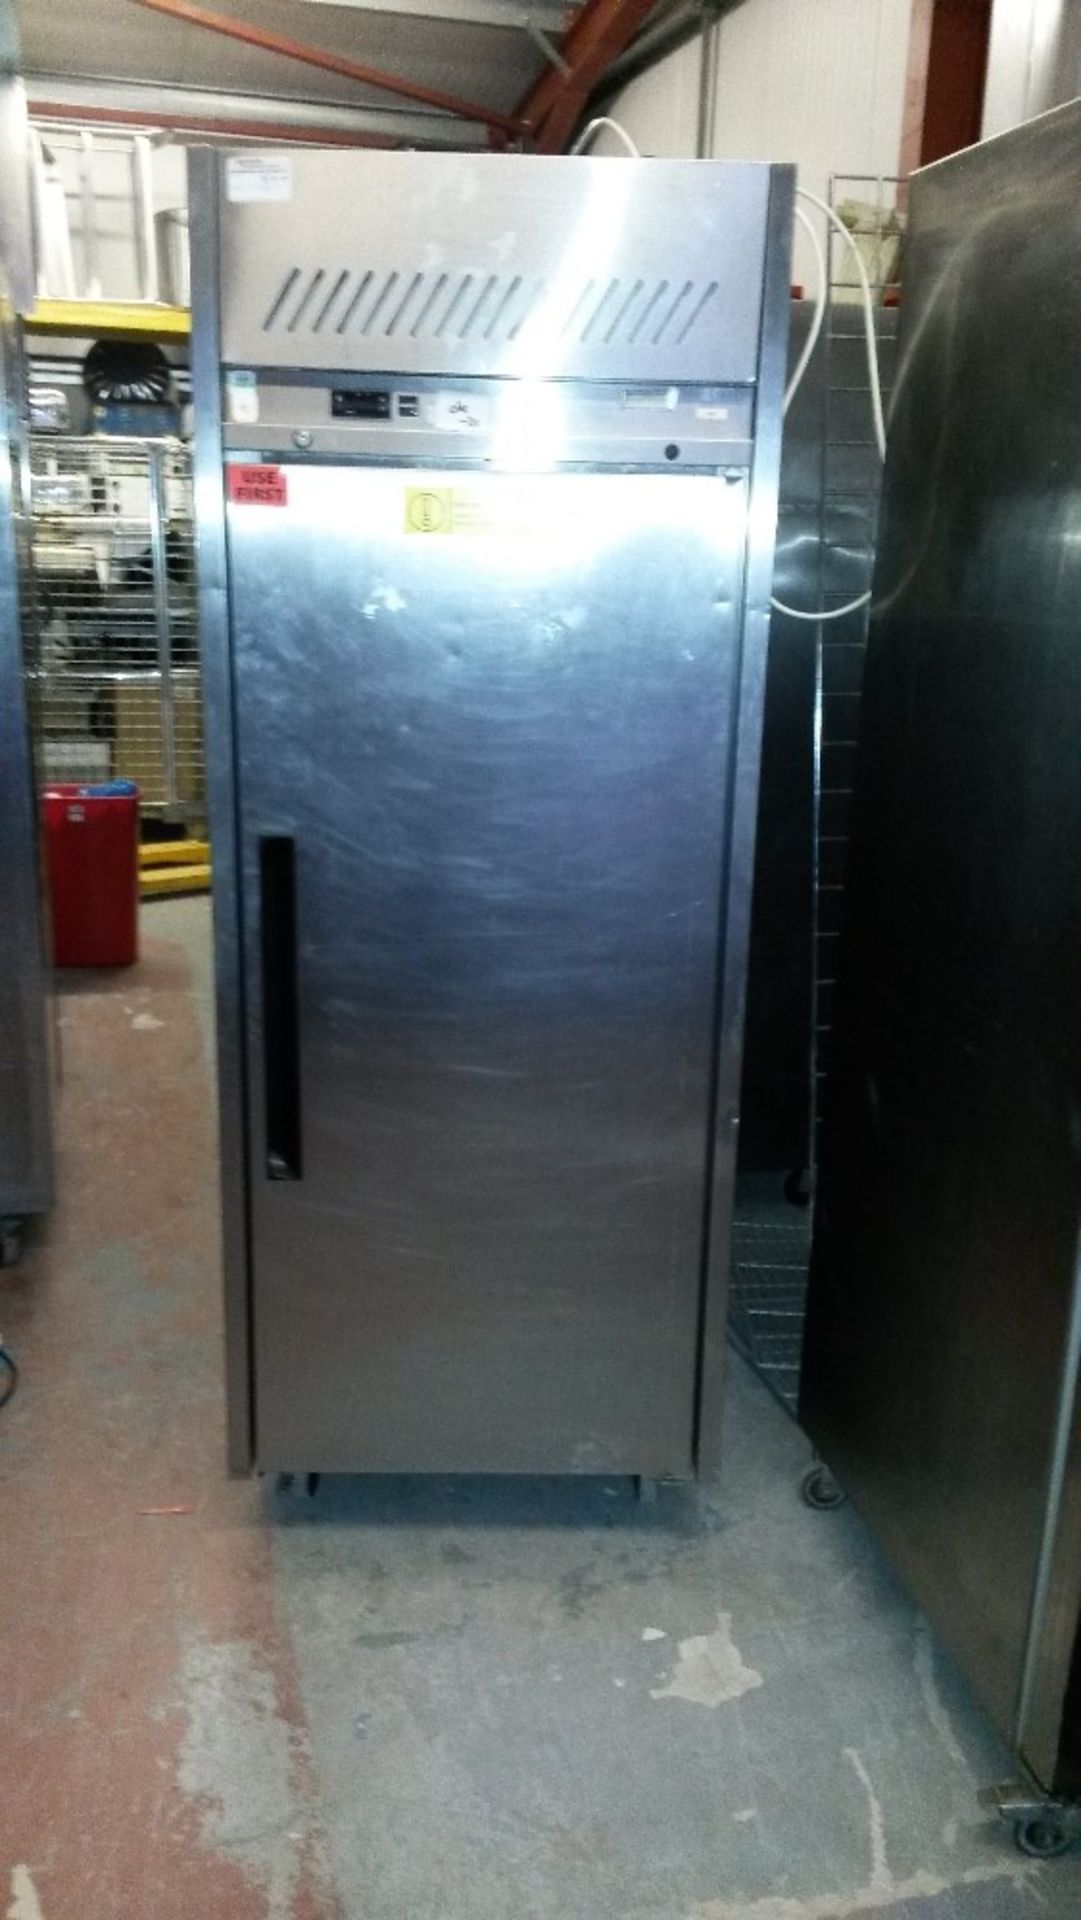 Williams Single door upright fridge, in working order with 3 shelves